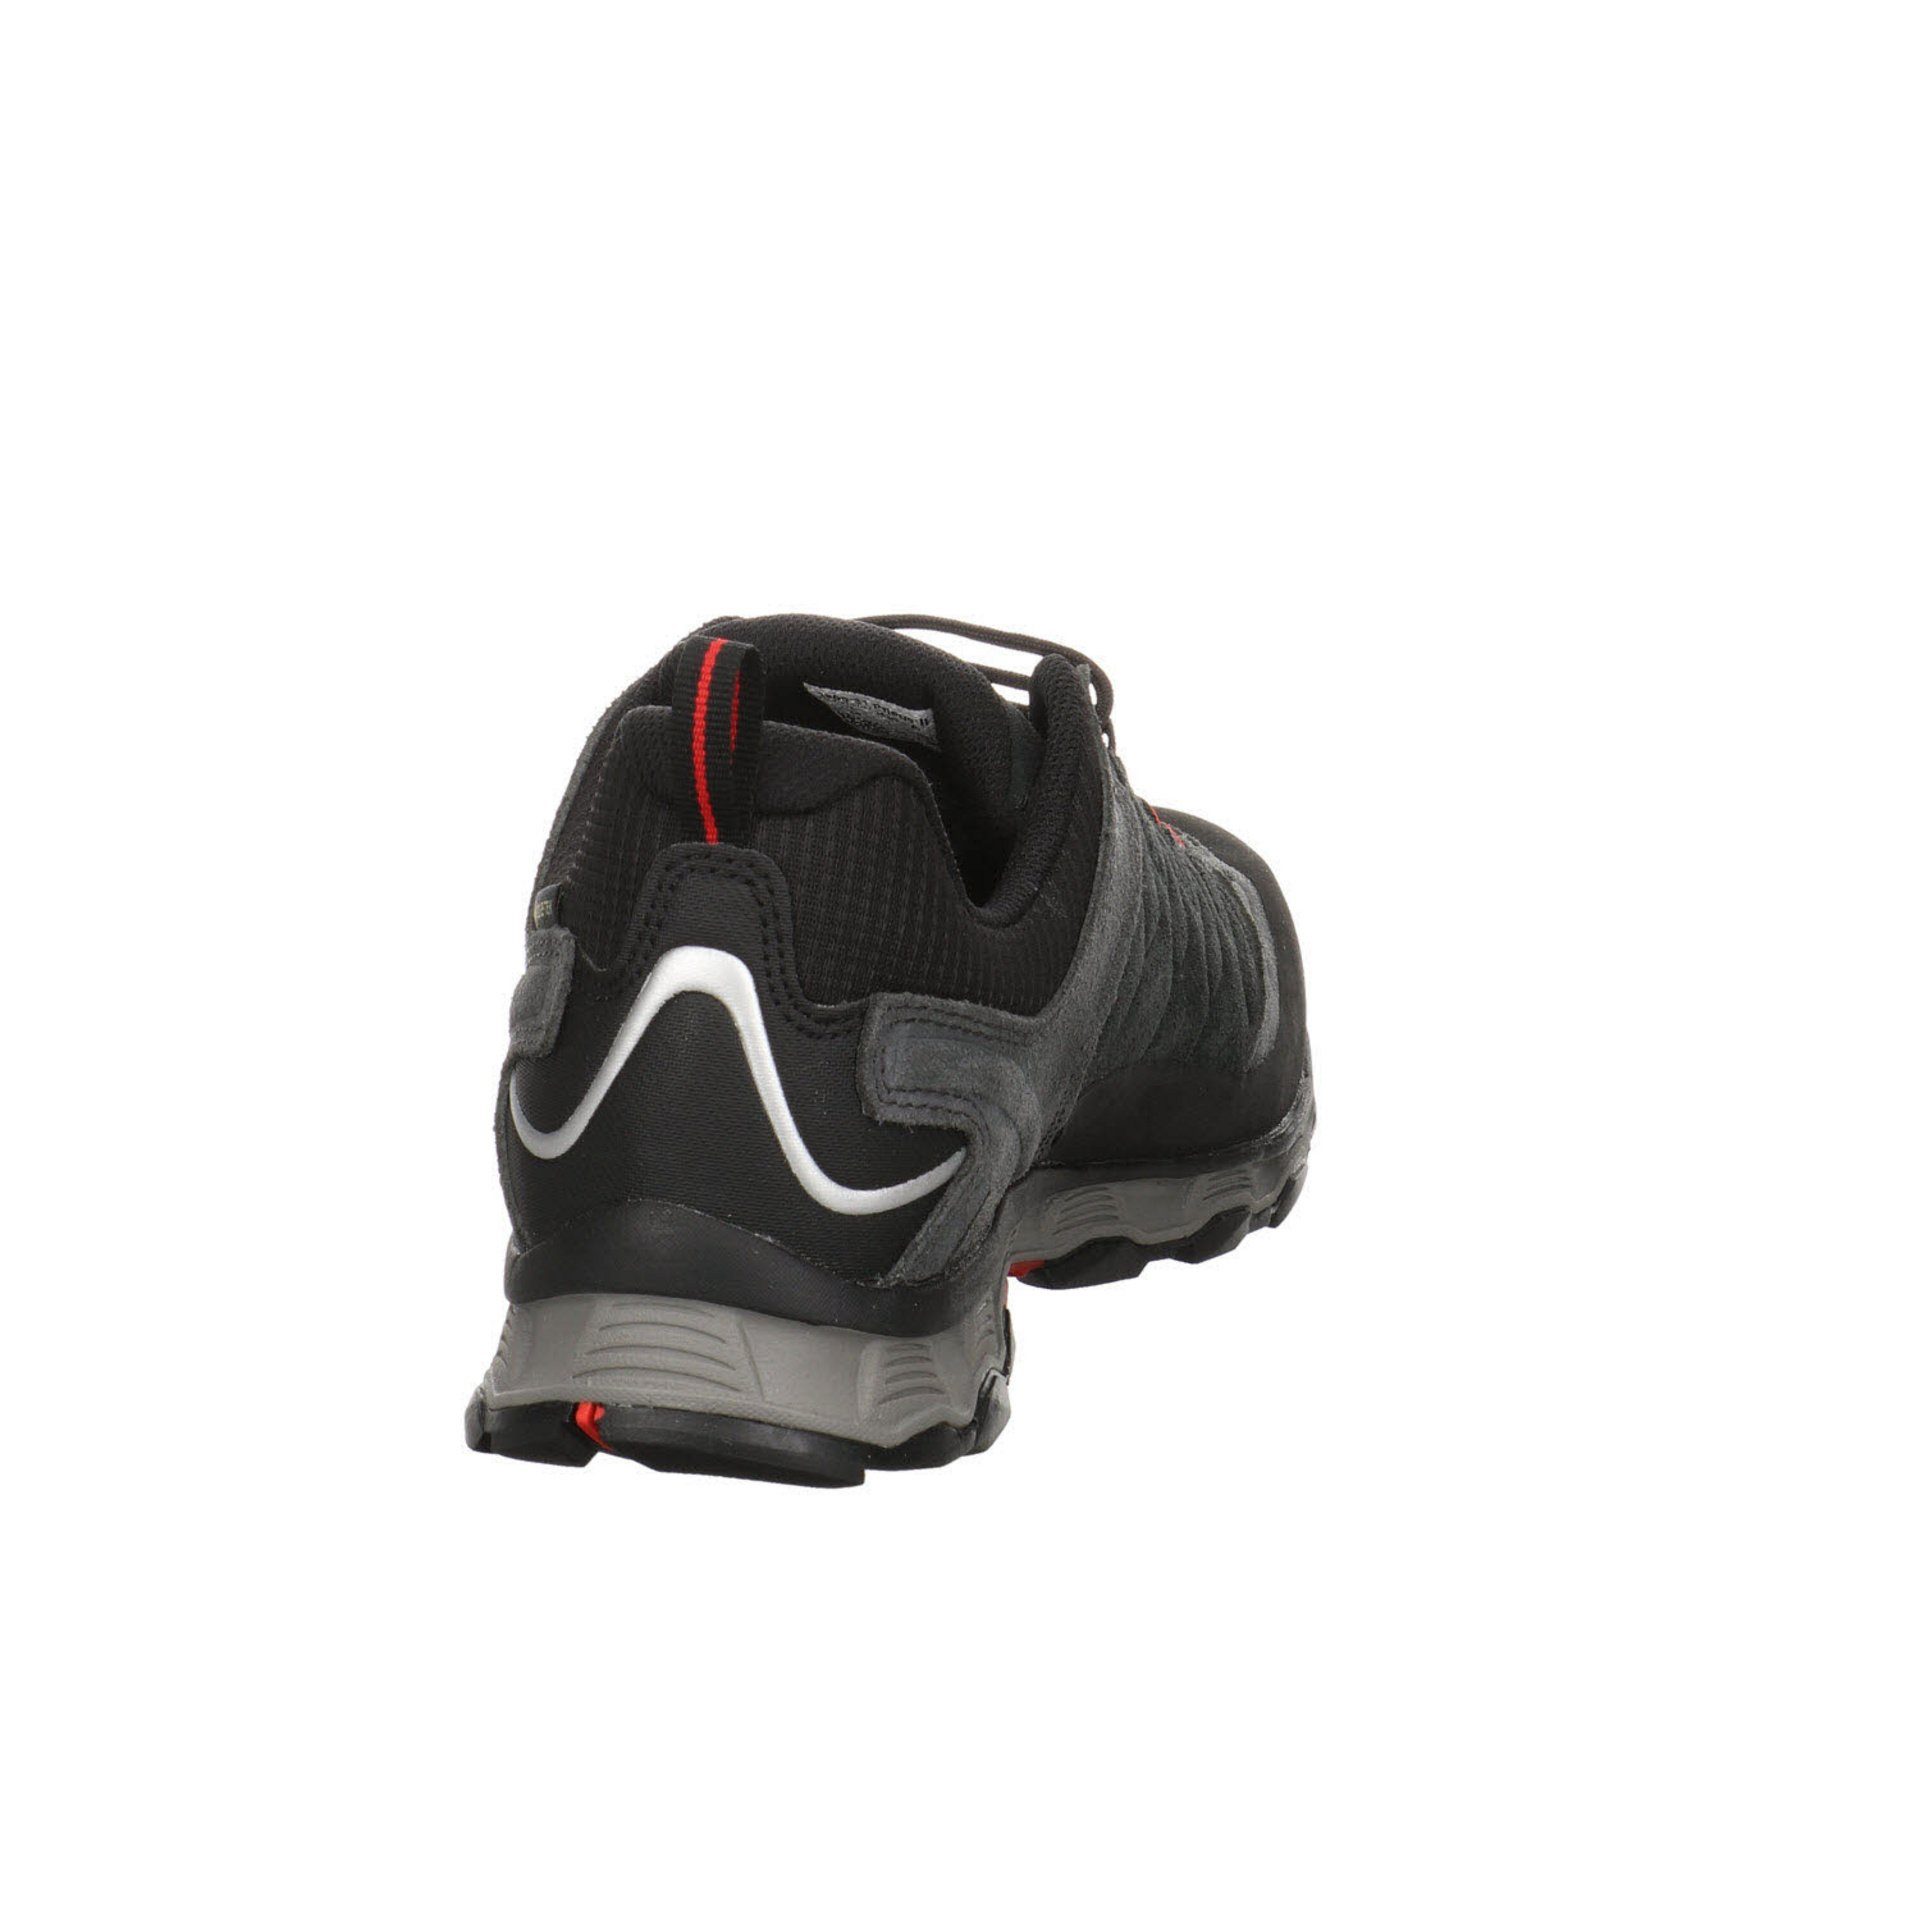 Meindl Herren Outdoorschuh Leder-/Textilkombination Outdoor GTX m Trail Lite kombiniert schwarz Schuhe Outdoorschuh